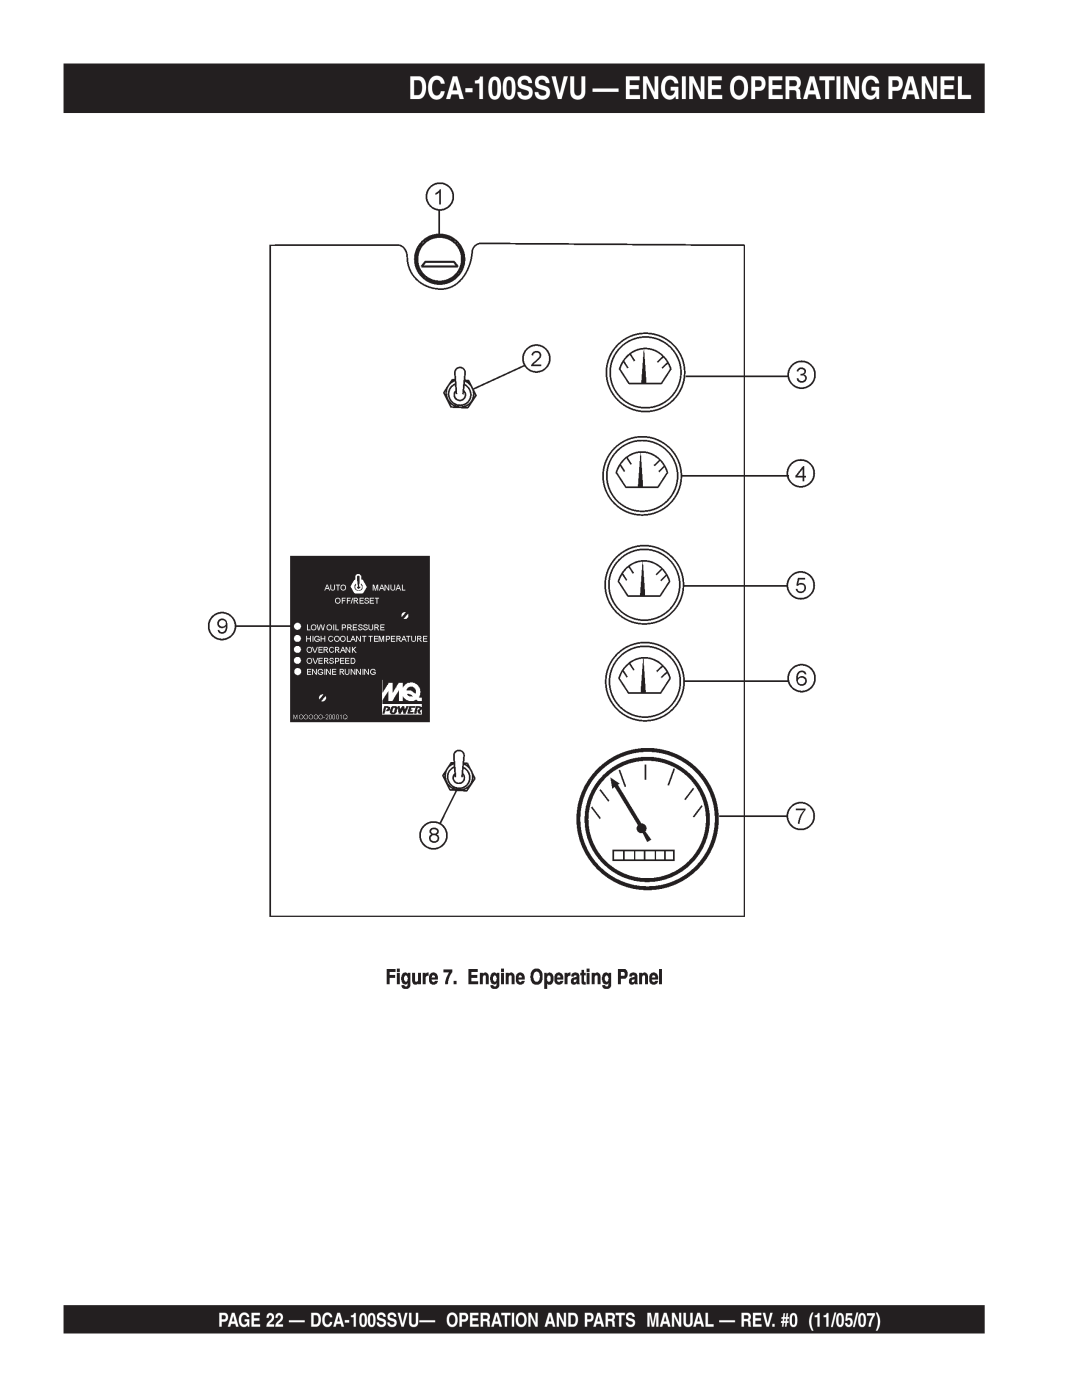 Multiquip operation manual DCA-100SSVU— ENGINE OPERATING PANEL, Engine Operating Panel 